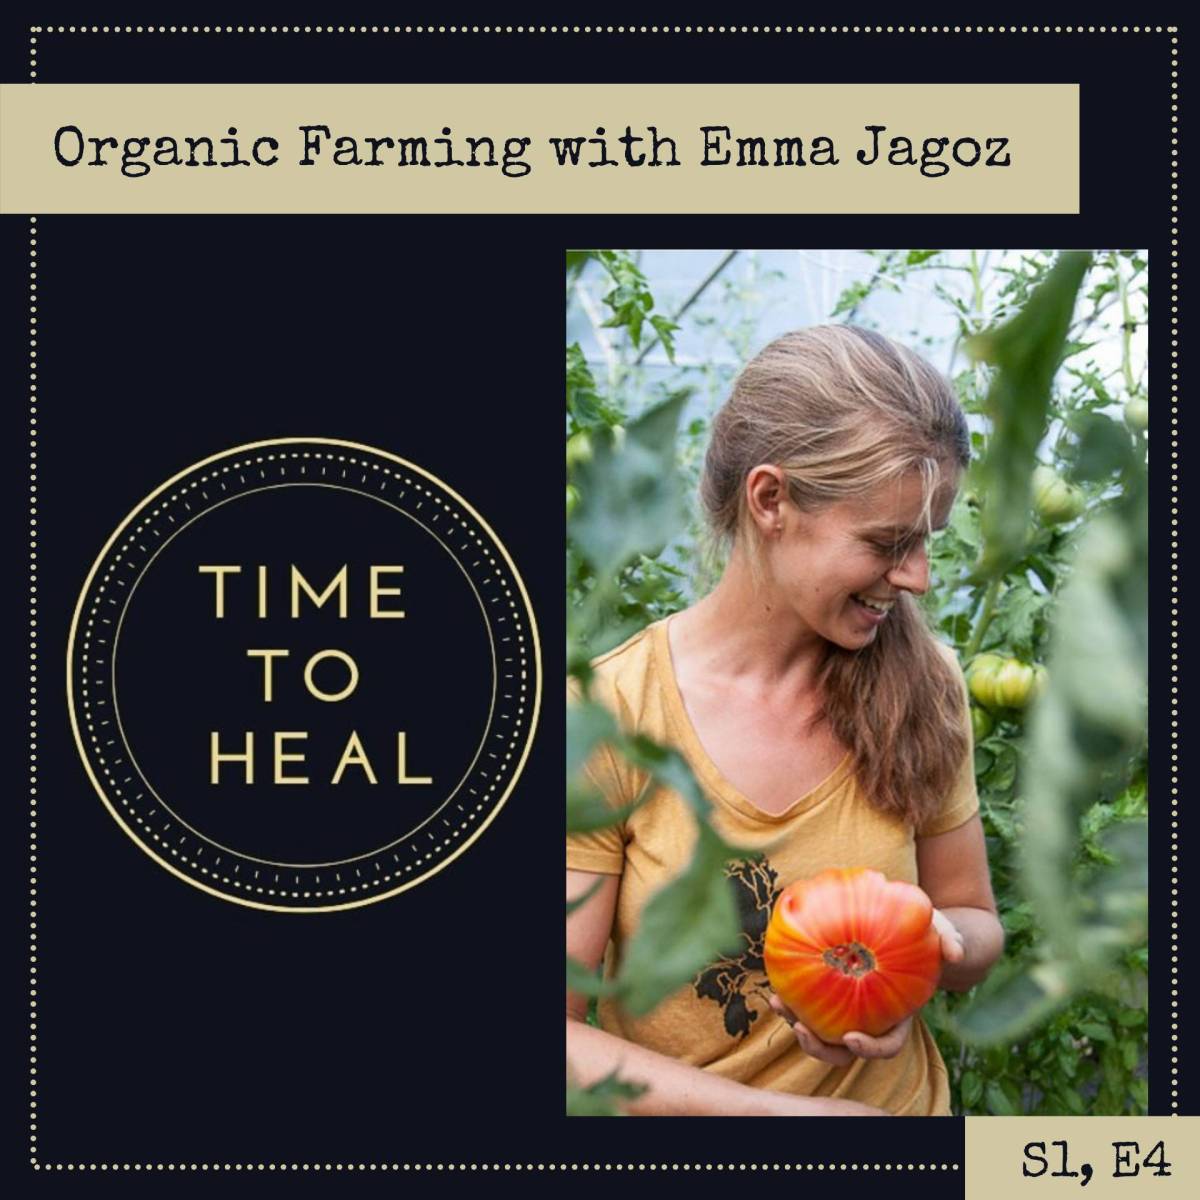 Organic Farming with Emma Jagoz